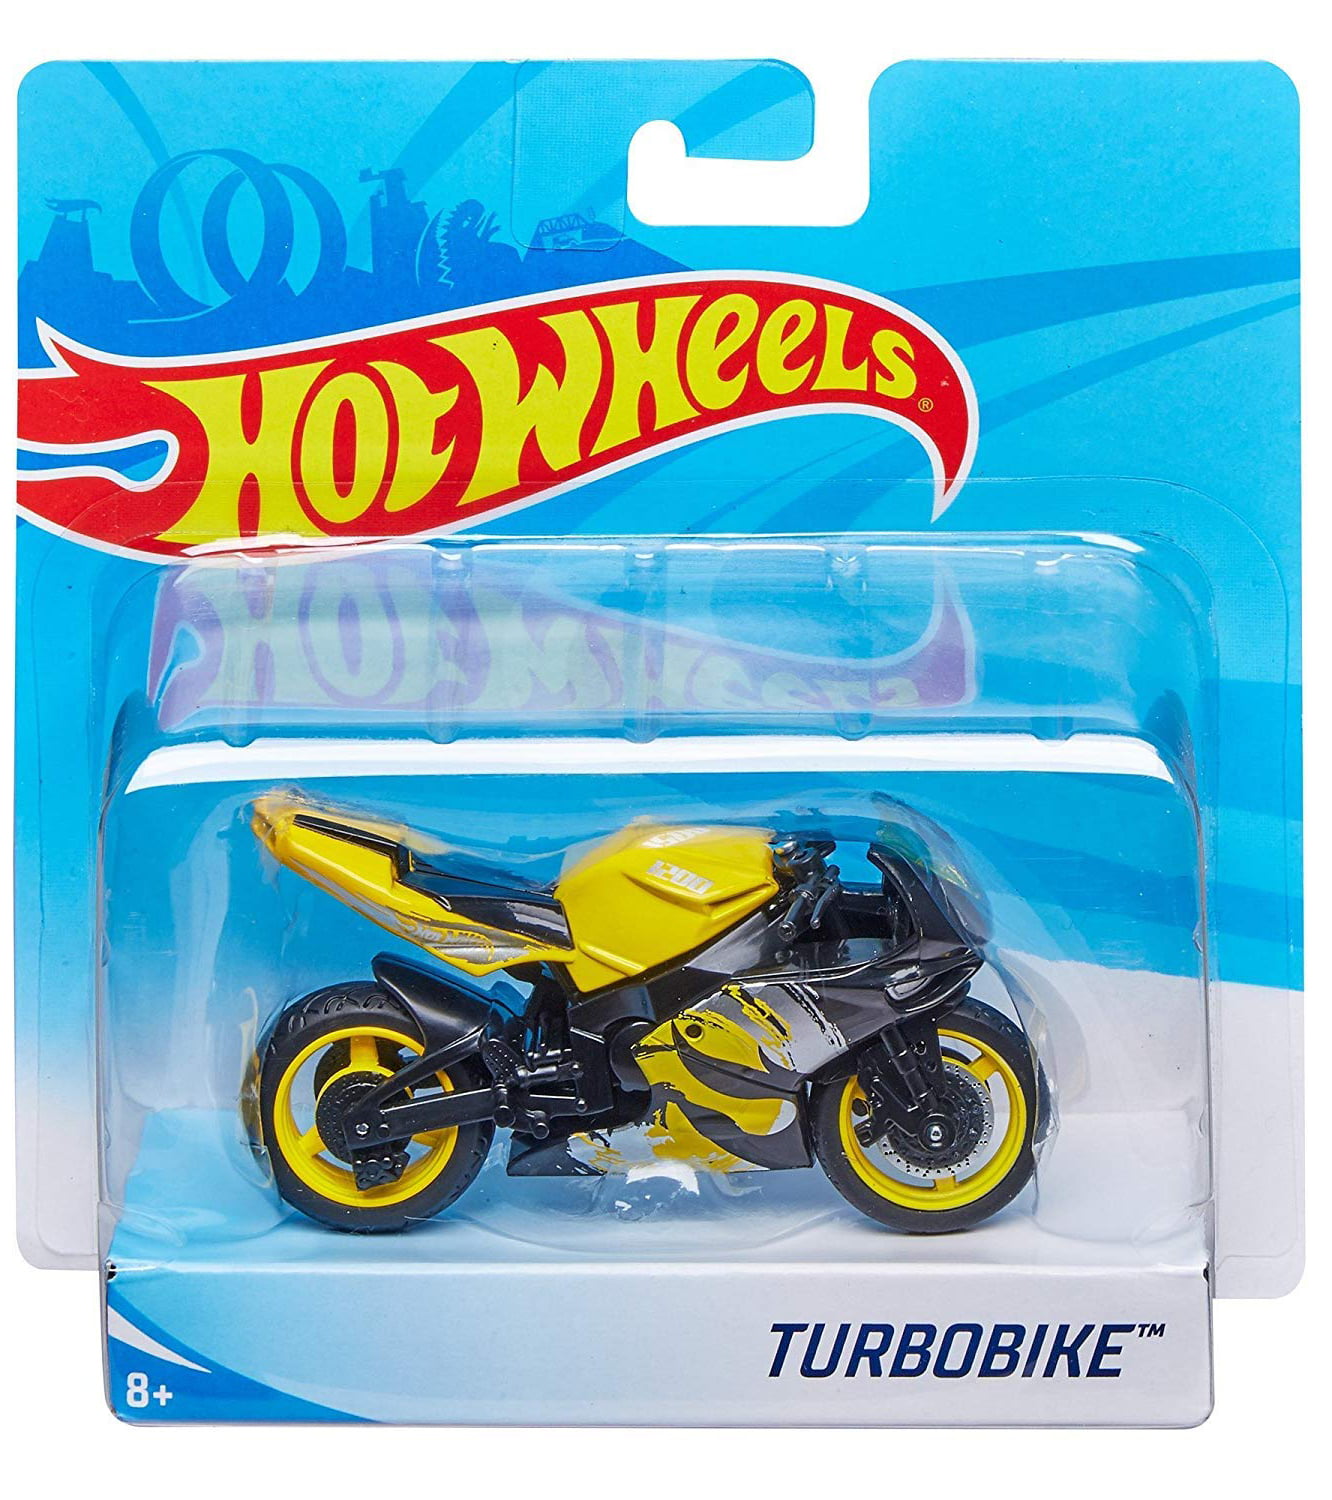 HOT WHEELS 1:18 MOTORCYCLE TURBOBIKE REAL WORKING PARTS STREET POWER TURBO BIKE 